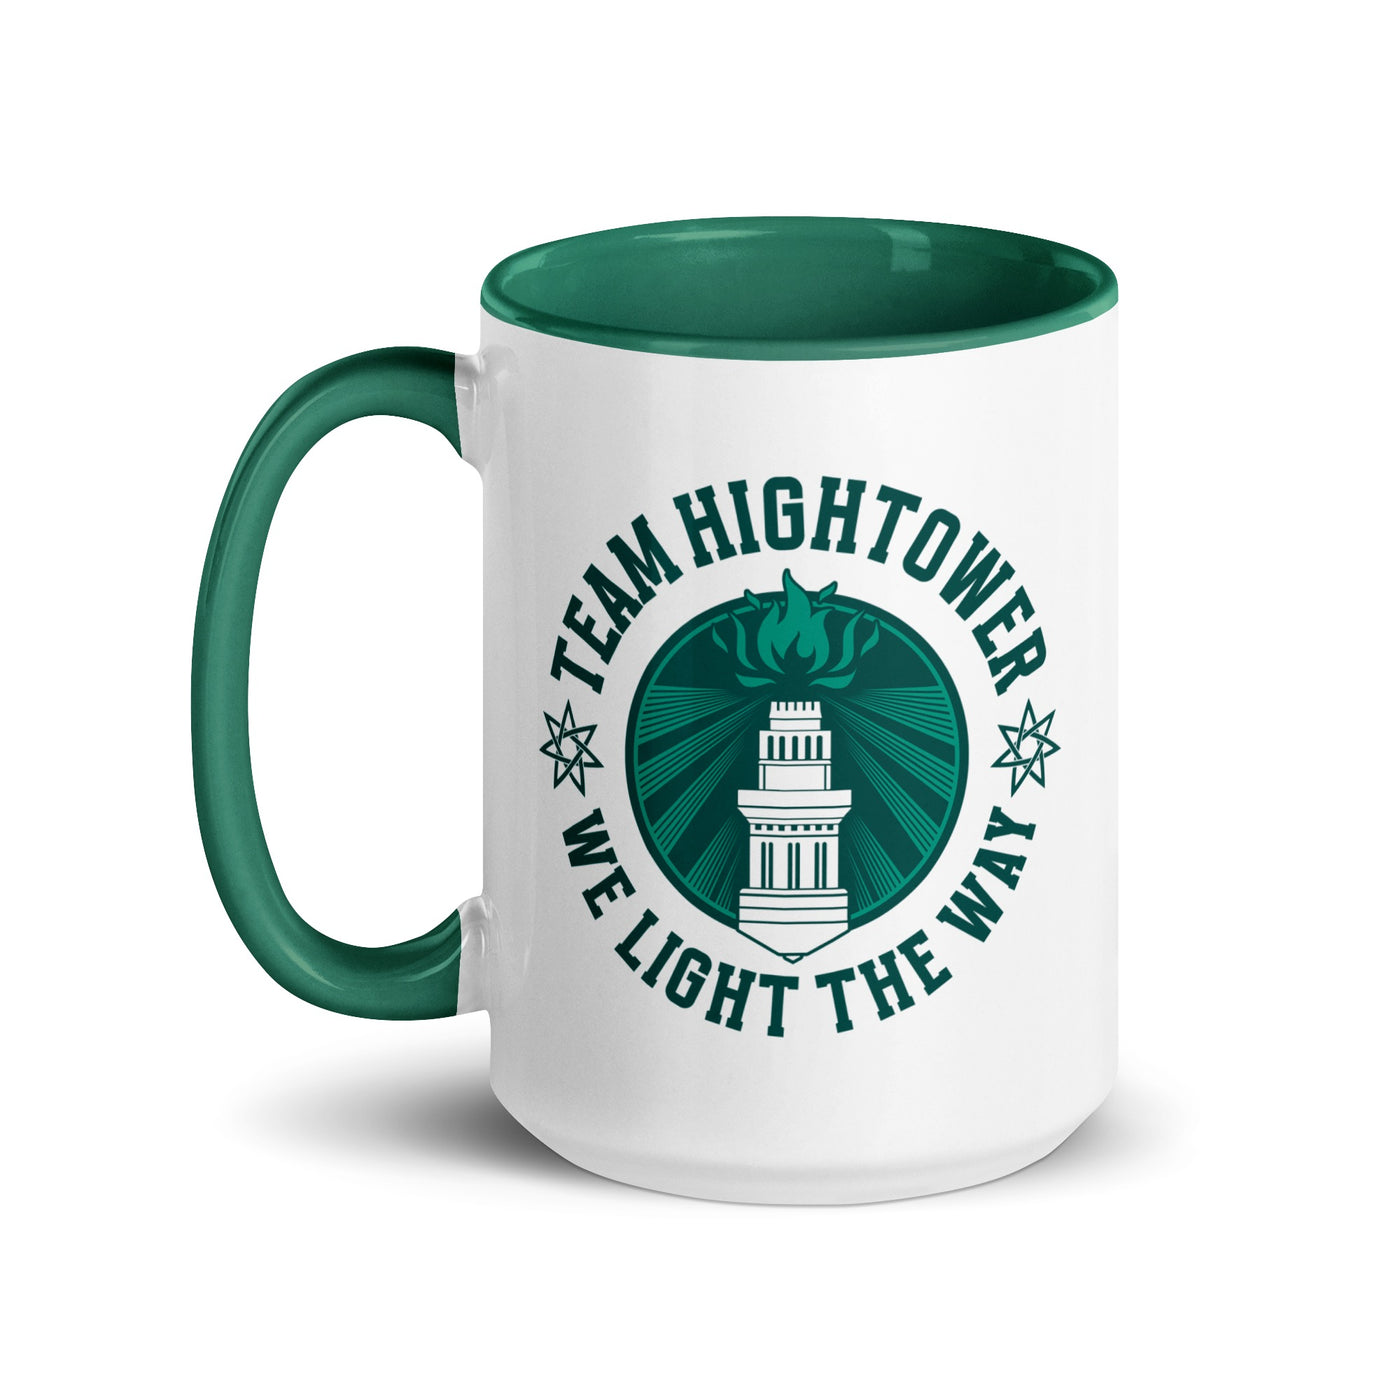 House of the Dragon Team Hightower Mug